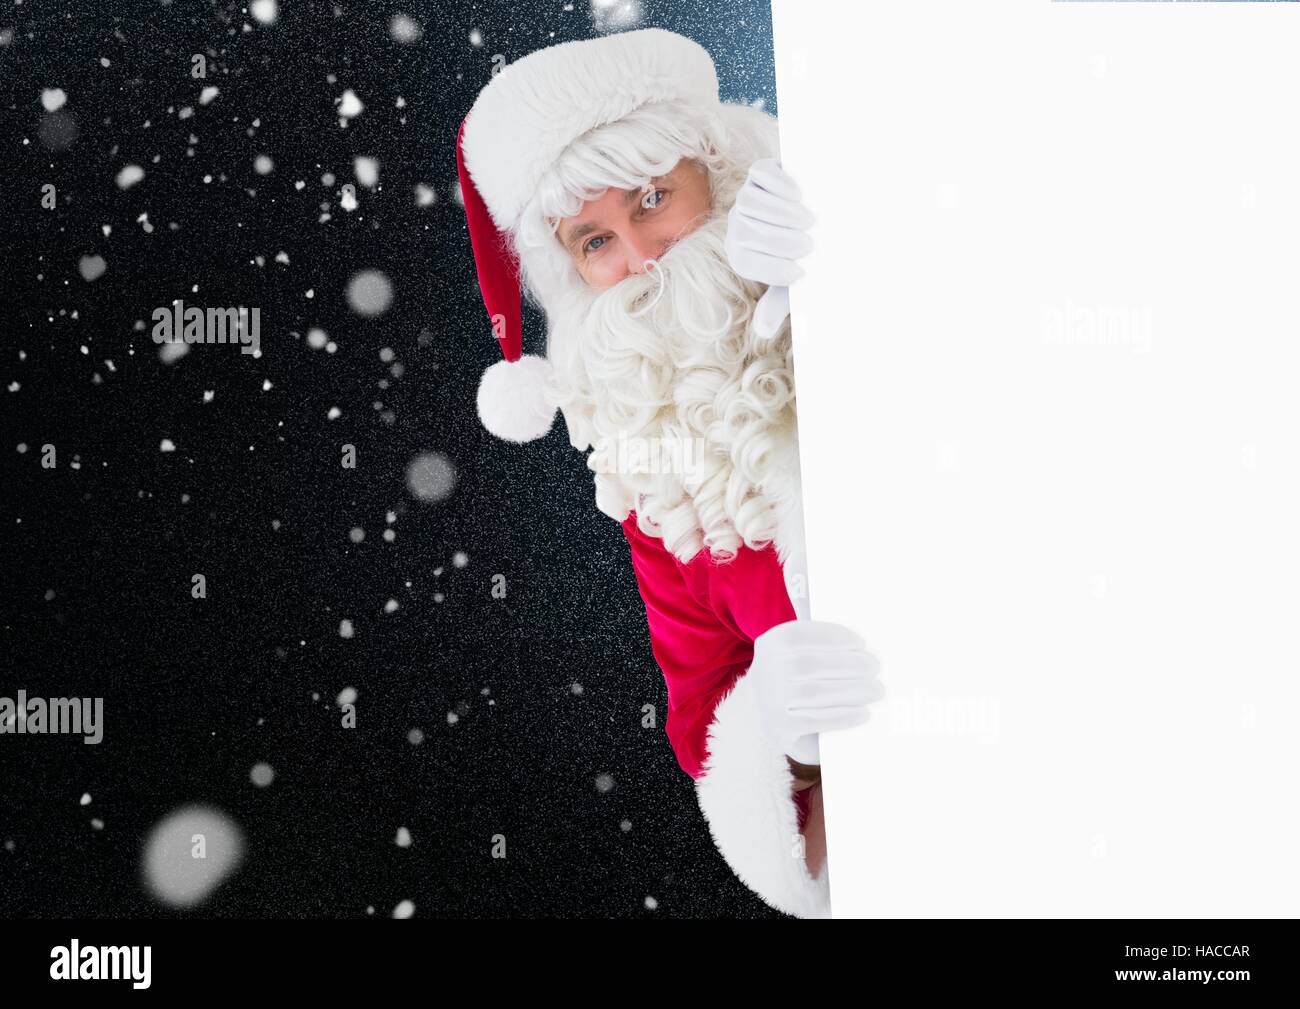 Santa peeking out from behind the wall Stock Photo